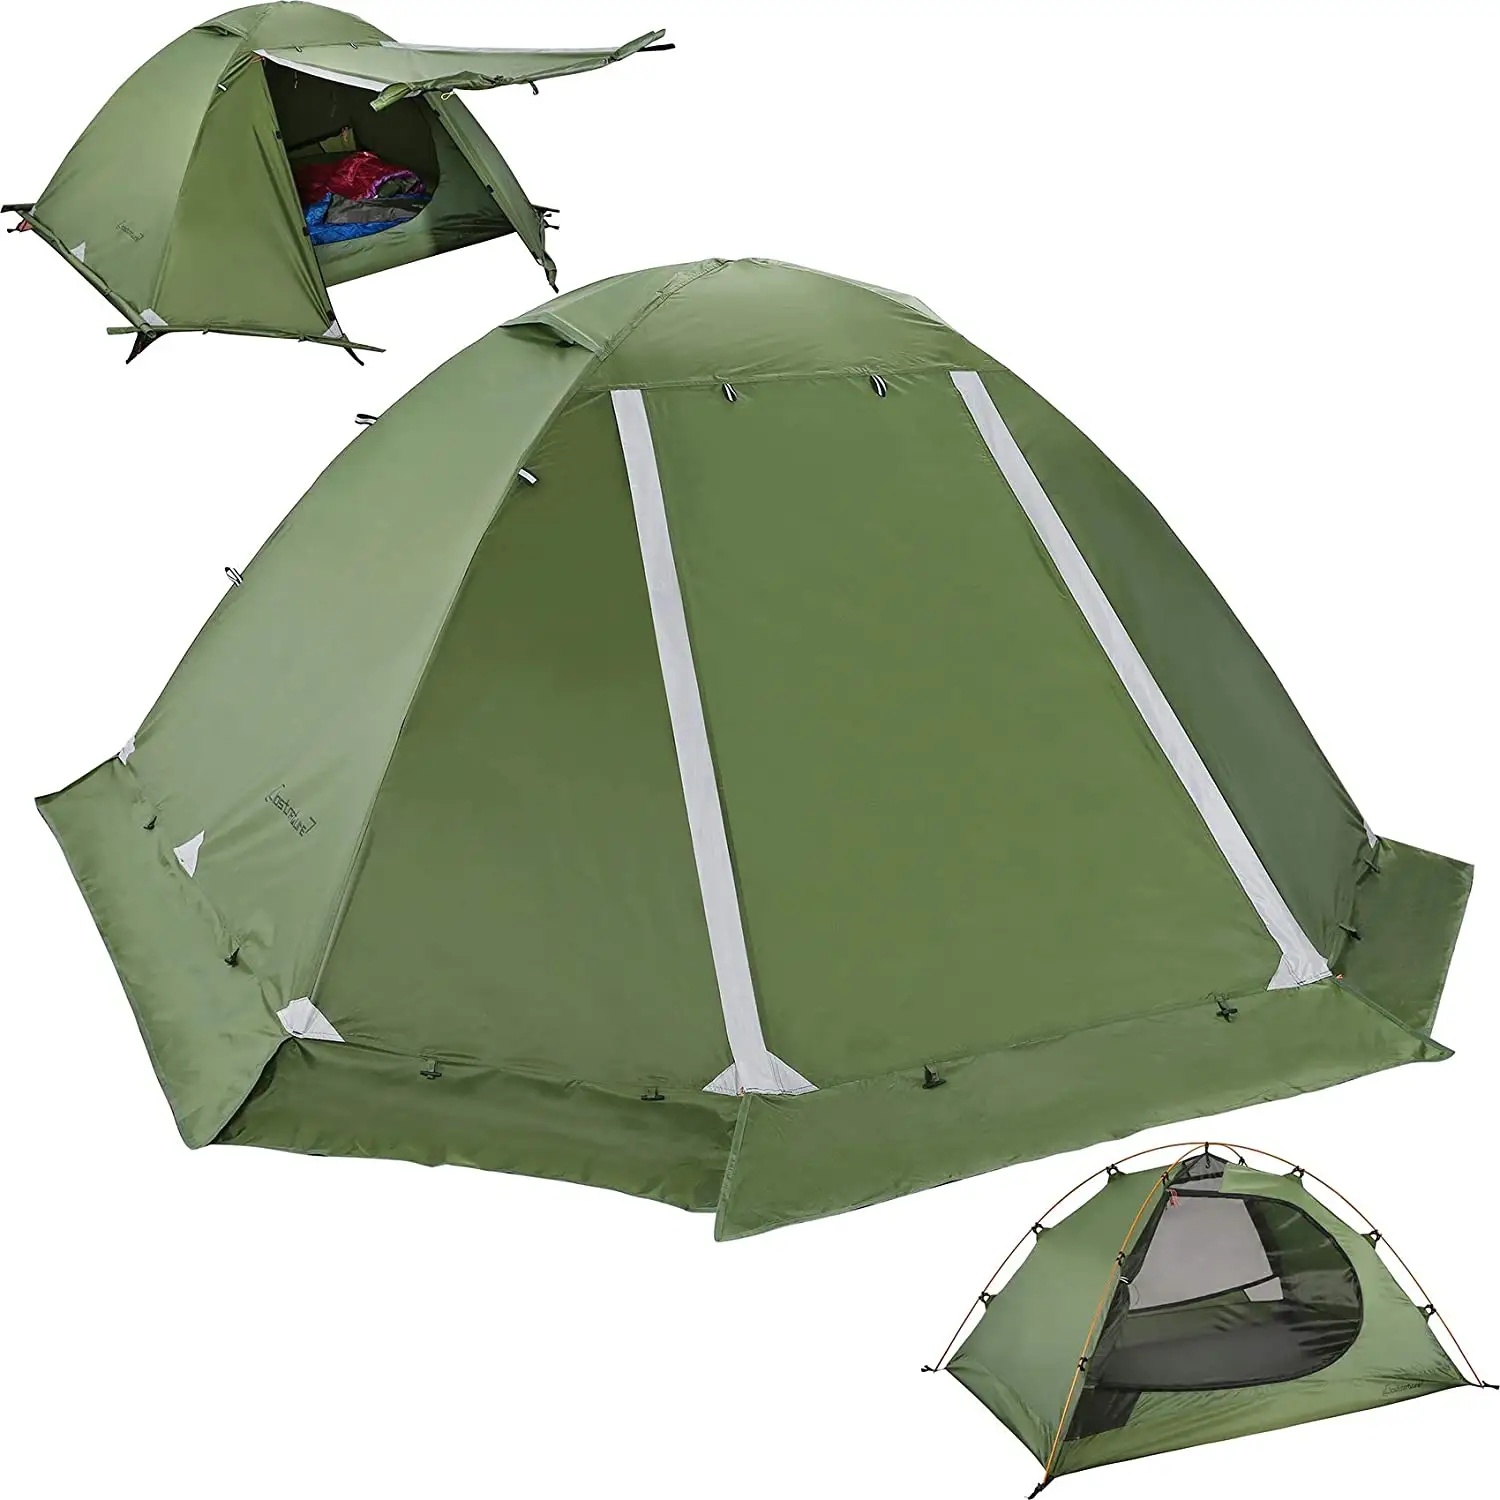 Woqi Outdoor Zelte Camping Zelt Outdoor Artikel Wasserdicht 3 Season 2 Personen Klapp zelt Wander ausrüstung